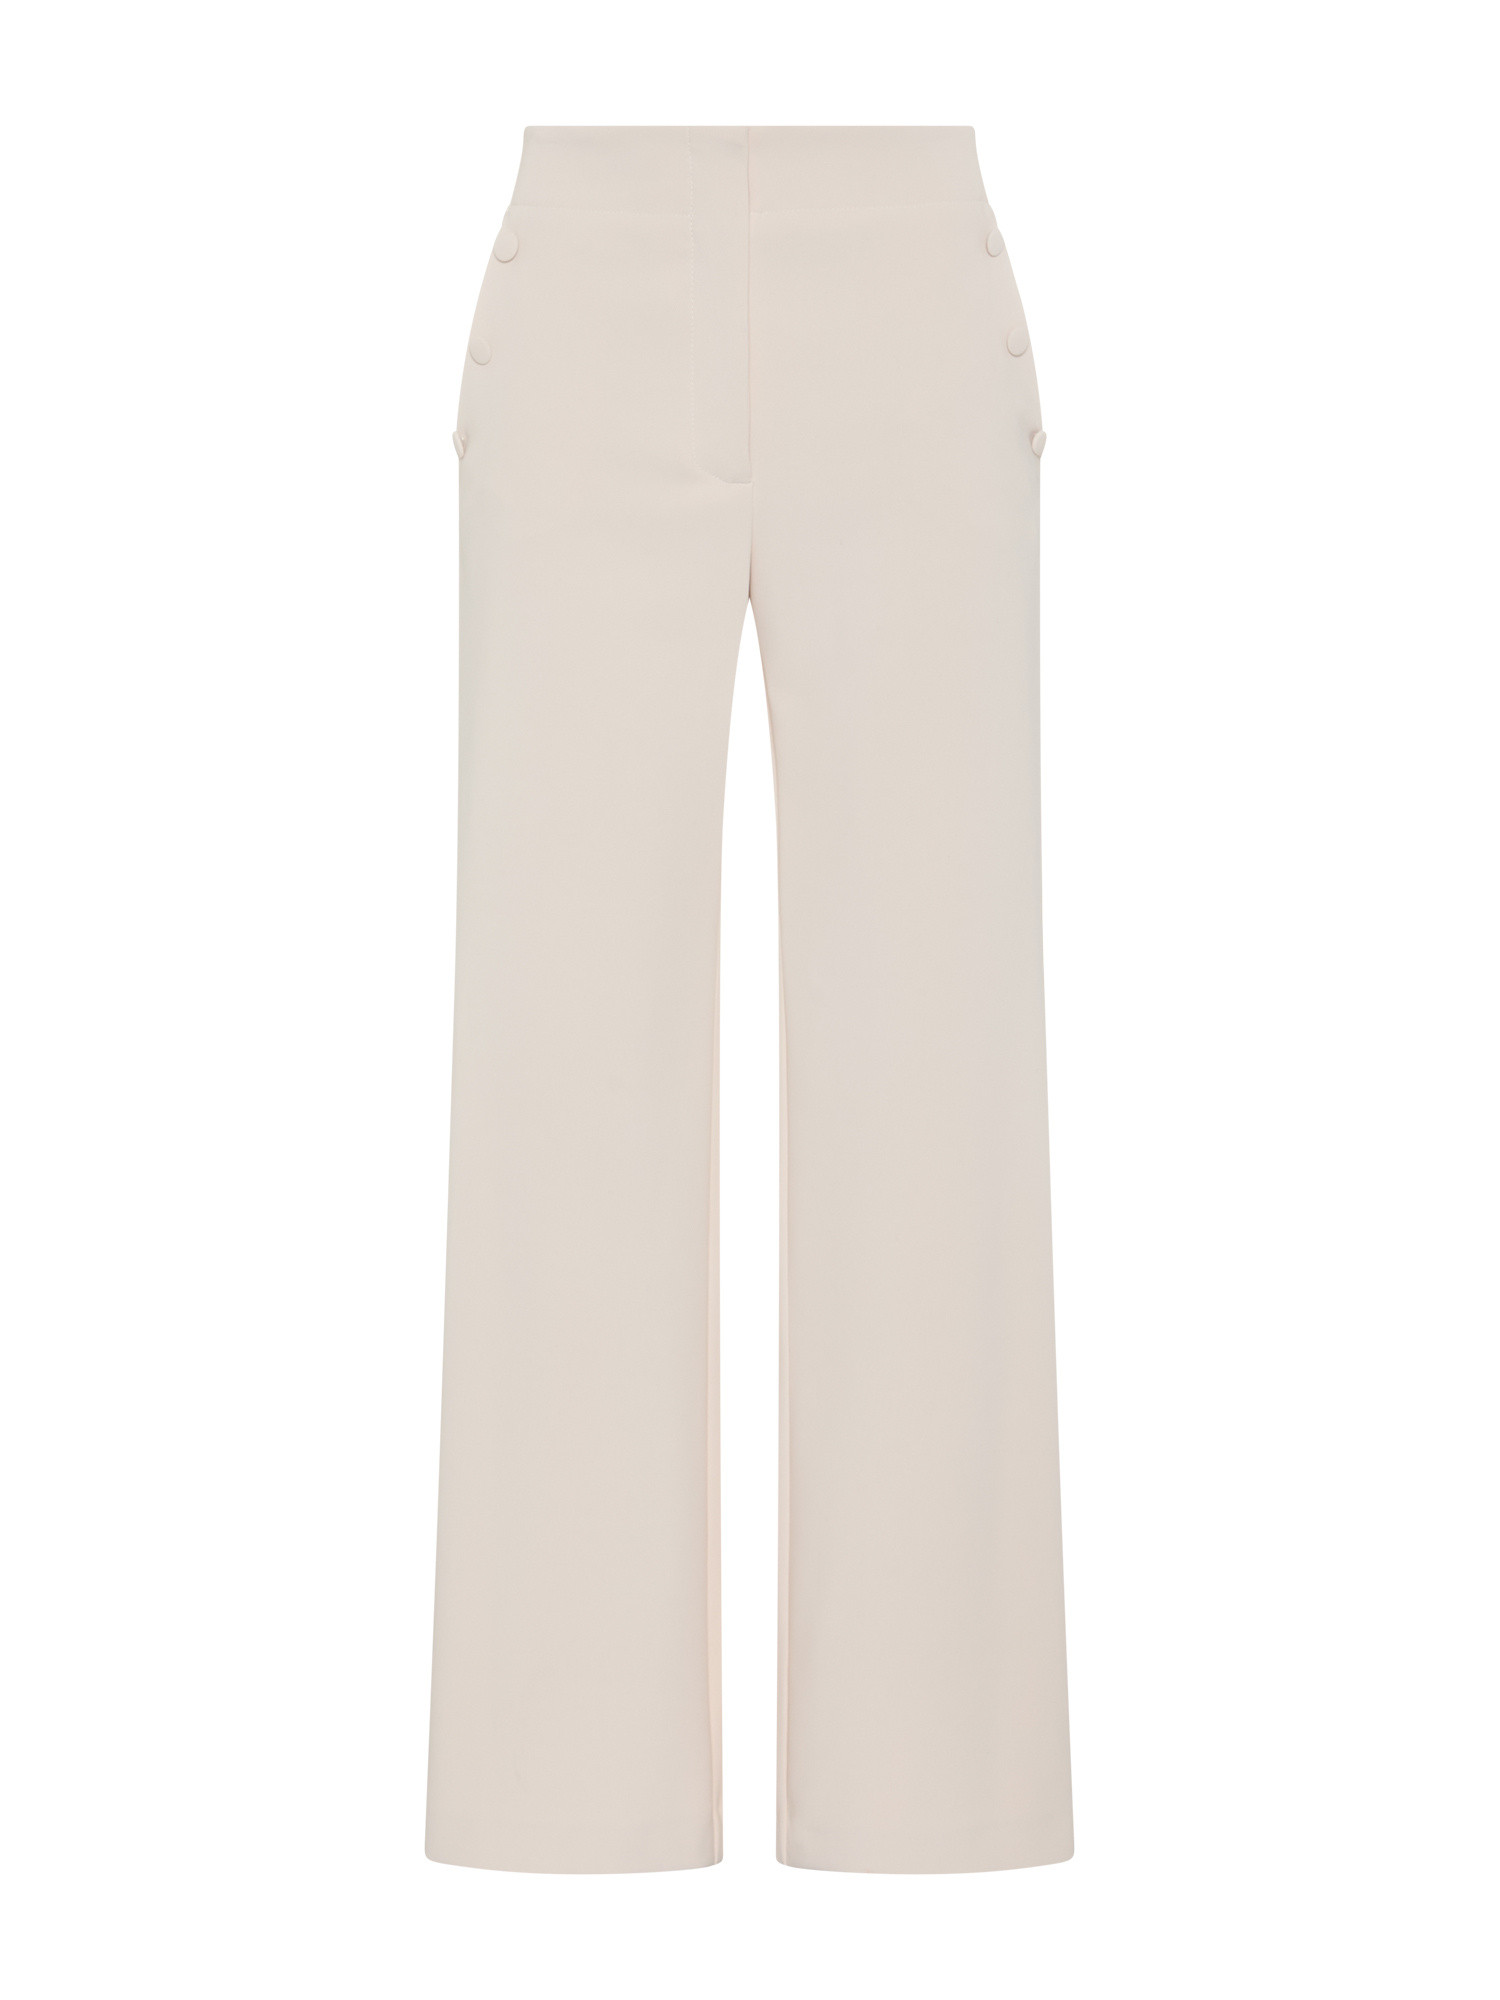 Koan - Wide leg trousers, Cream, large image number 0